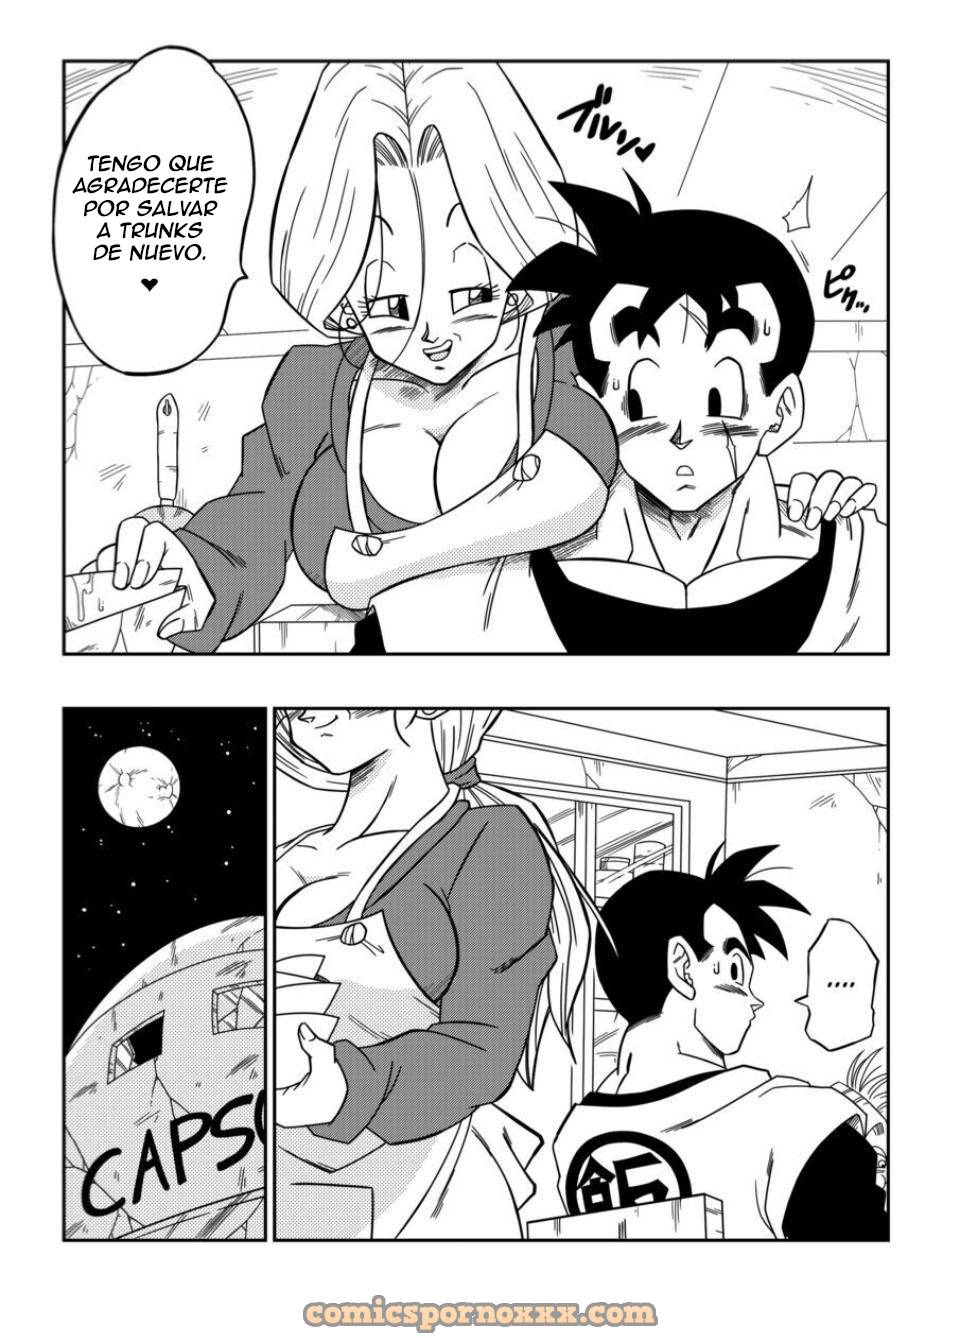 Lots of Sex in this Future - 4 - Comics Porno - Hentai Manga - Cartoon XXX